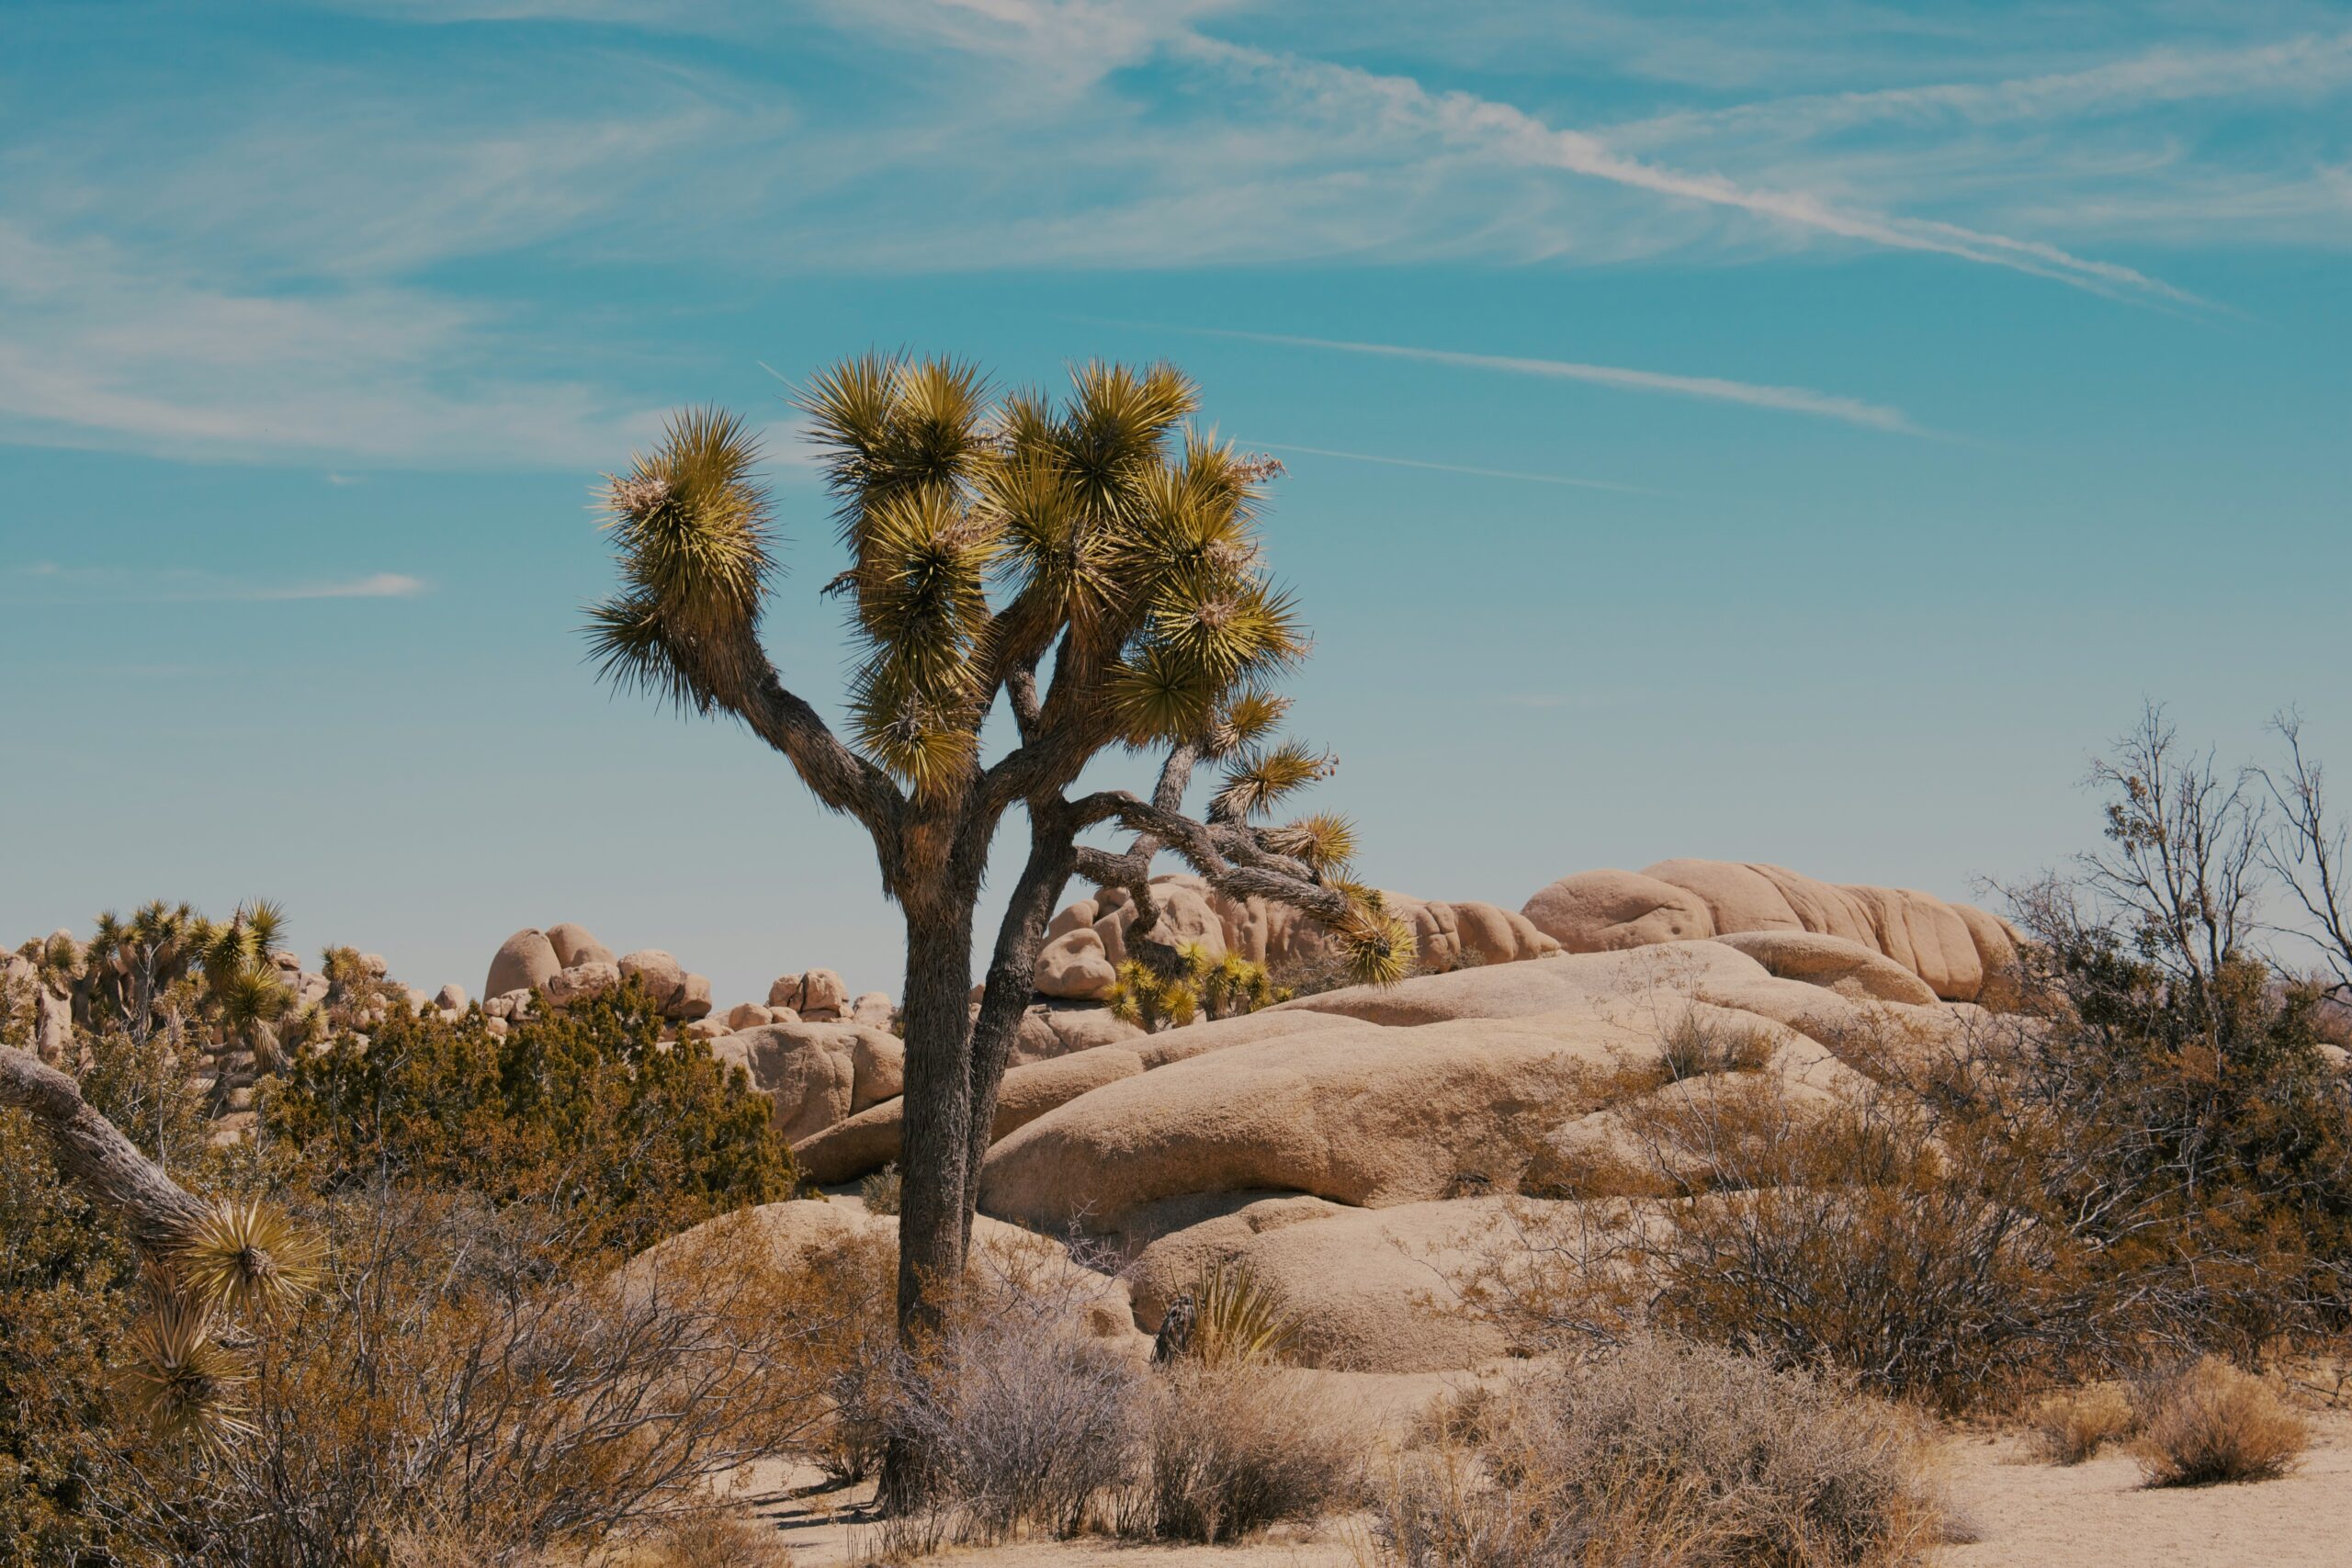 Joshua tree in the desert of California.